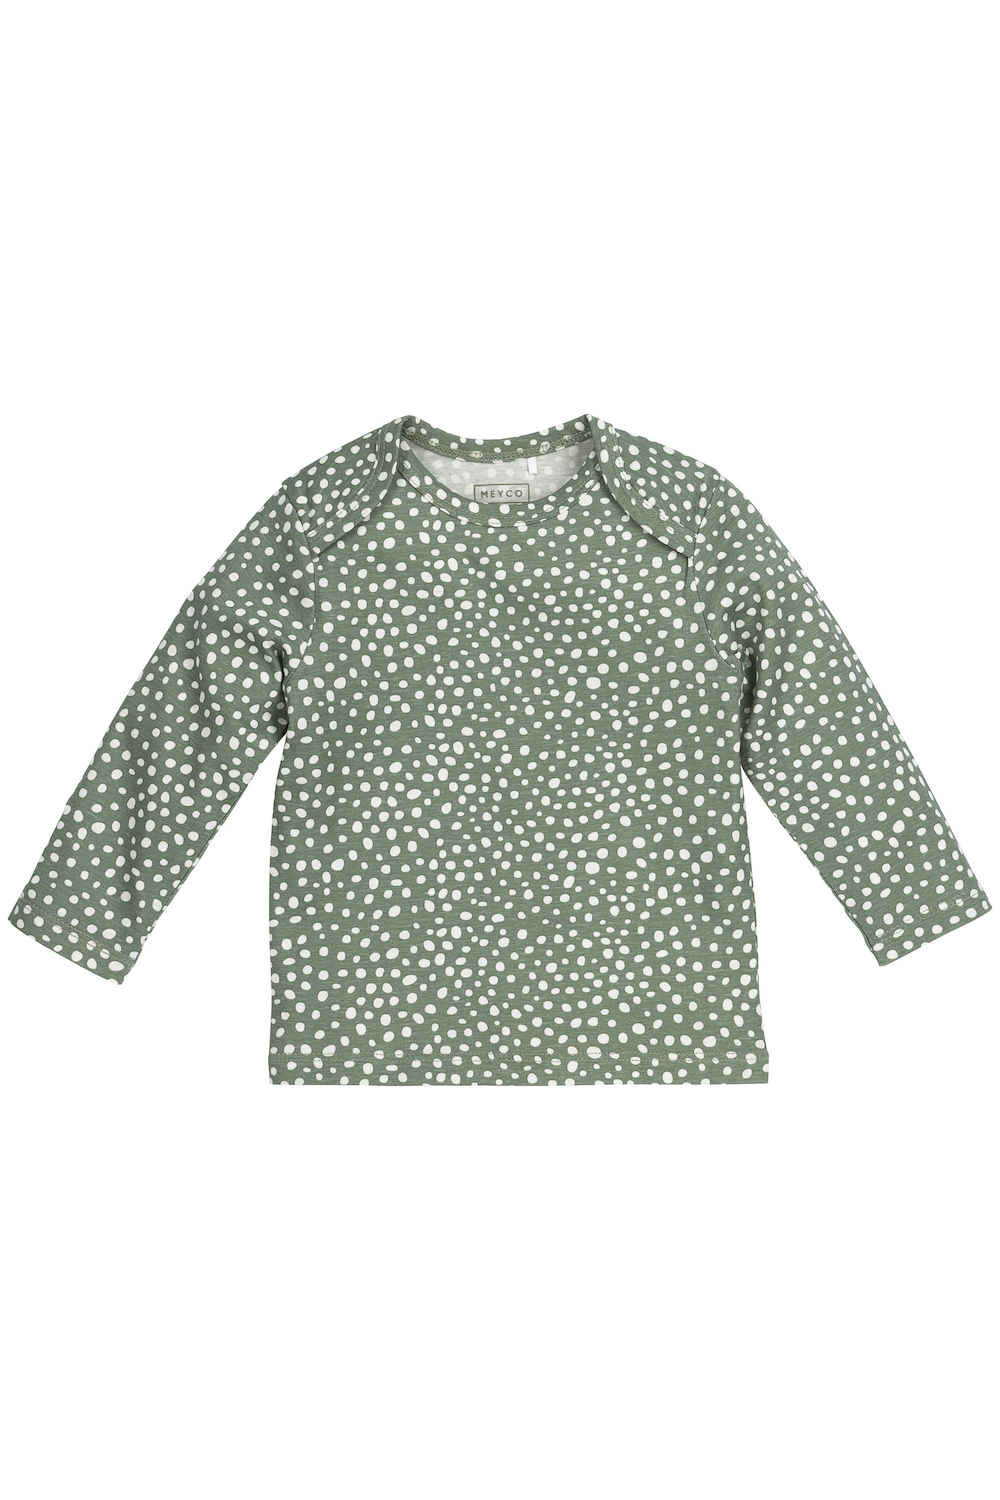 Baby Pyjama 2er pack Cheetah - forest green - 62/68